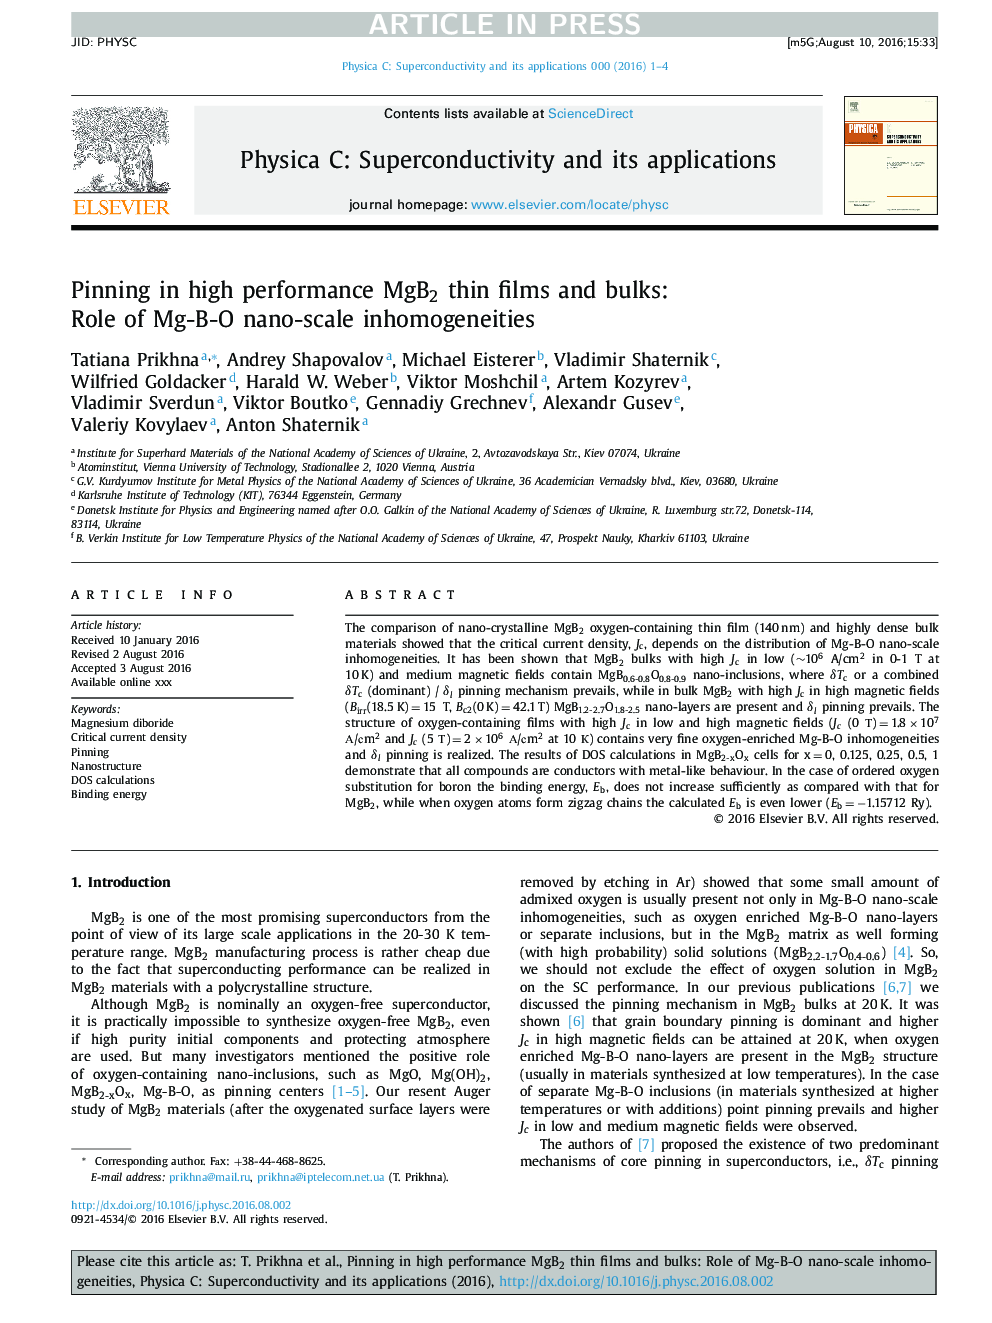 Pinning in high performance MgB2 thin films and bulks: Role of Mg-B-O nano-scale inhomogeneities